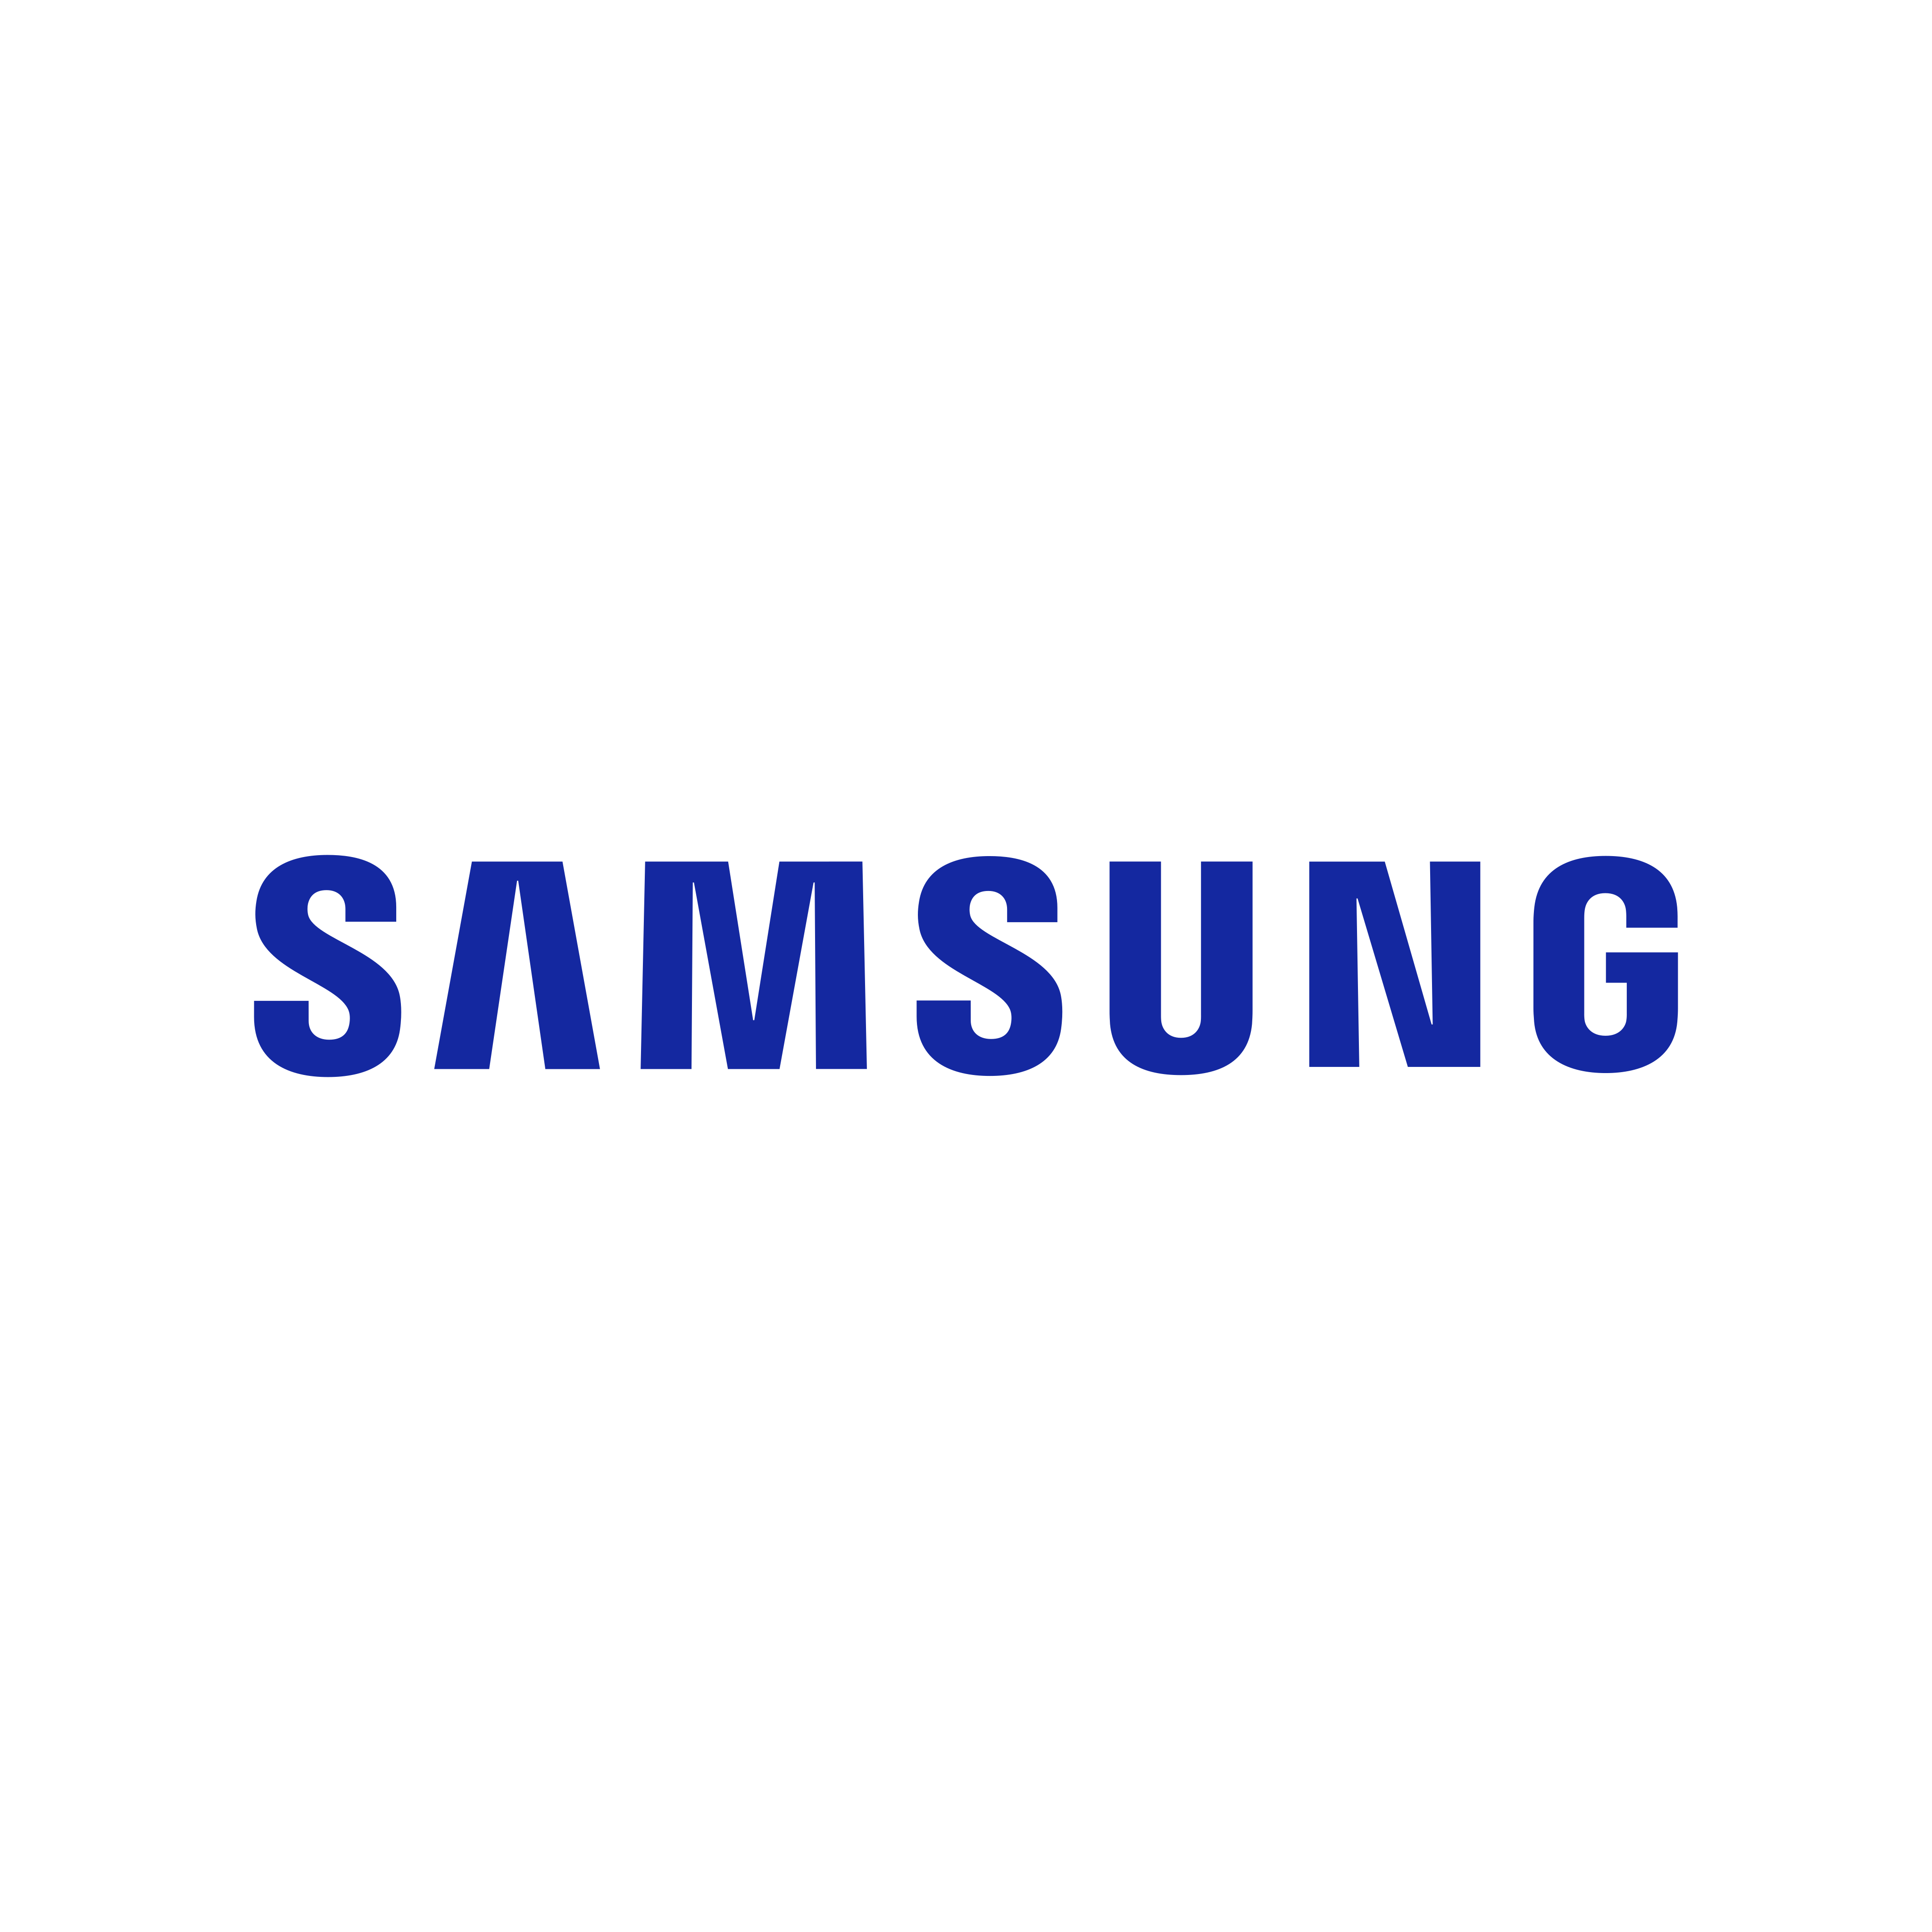 samsung logo 7 - Samsung Logo